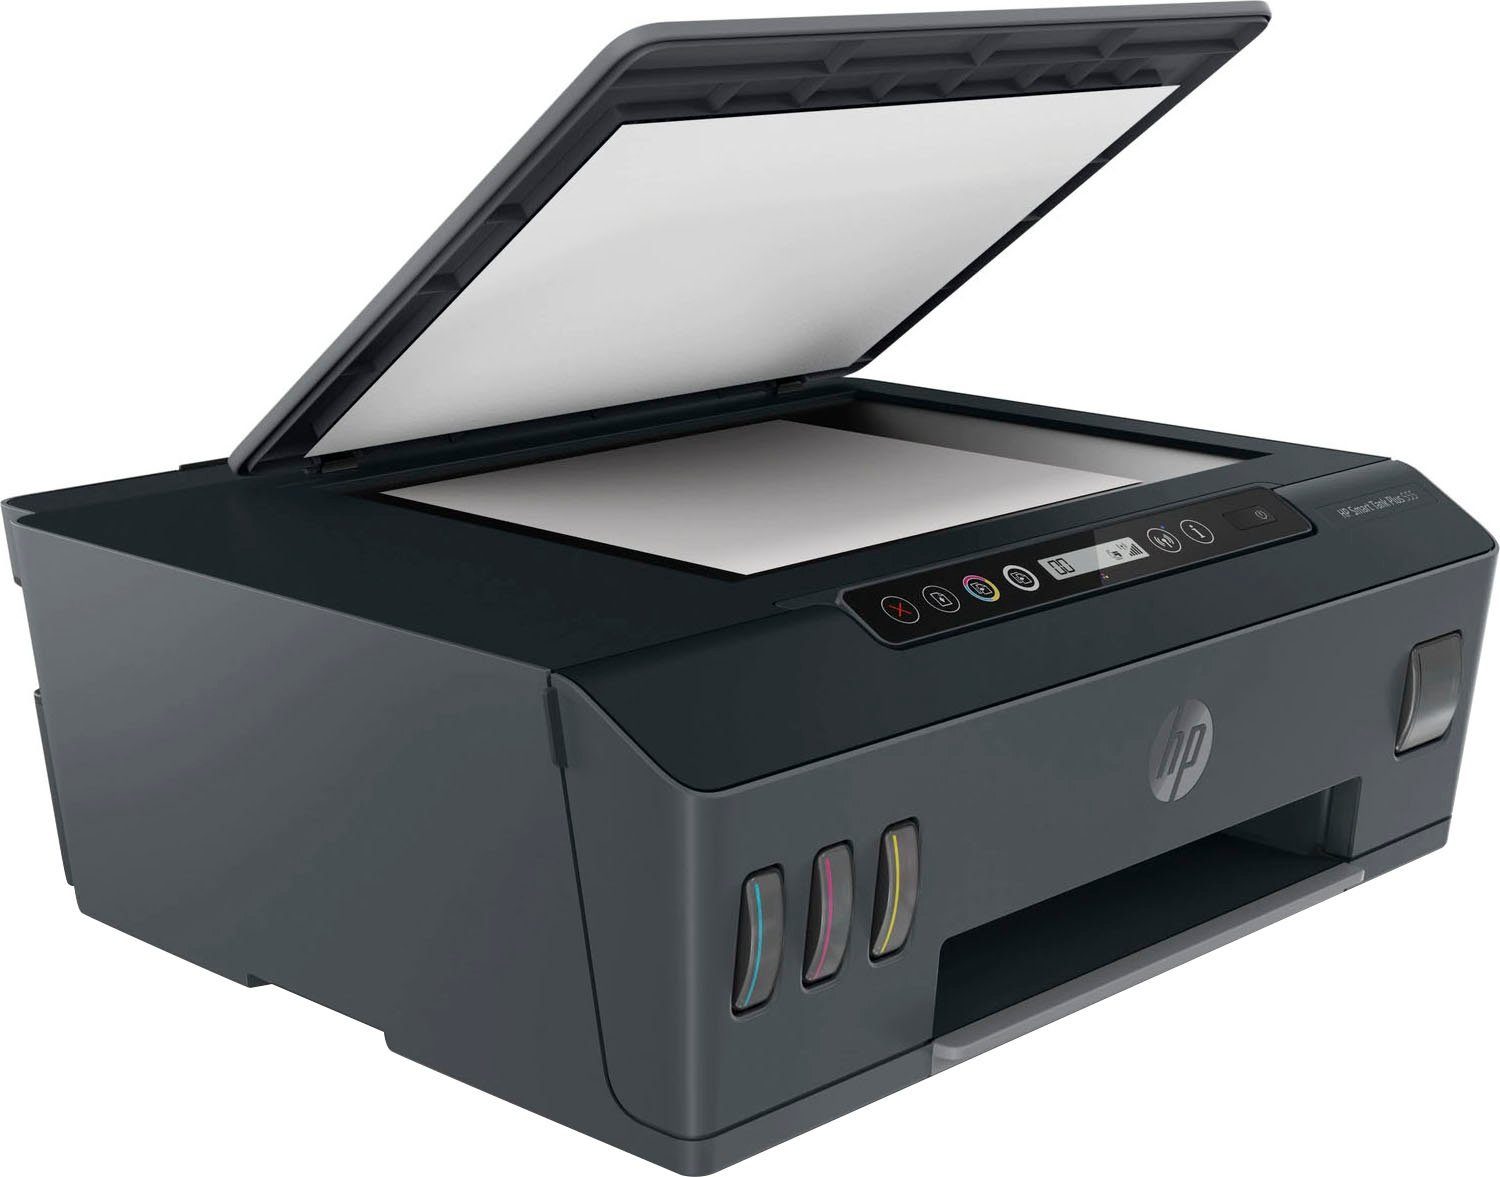 555 kompatibel) Multifunktionsdrucker, HP+ Plus (Bluetooth, Direct, Instant Ink Smart Wi-Fi Tank HP